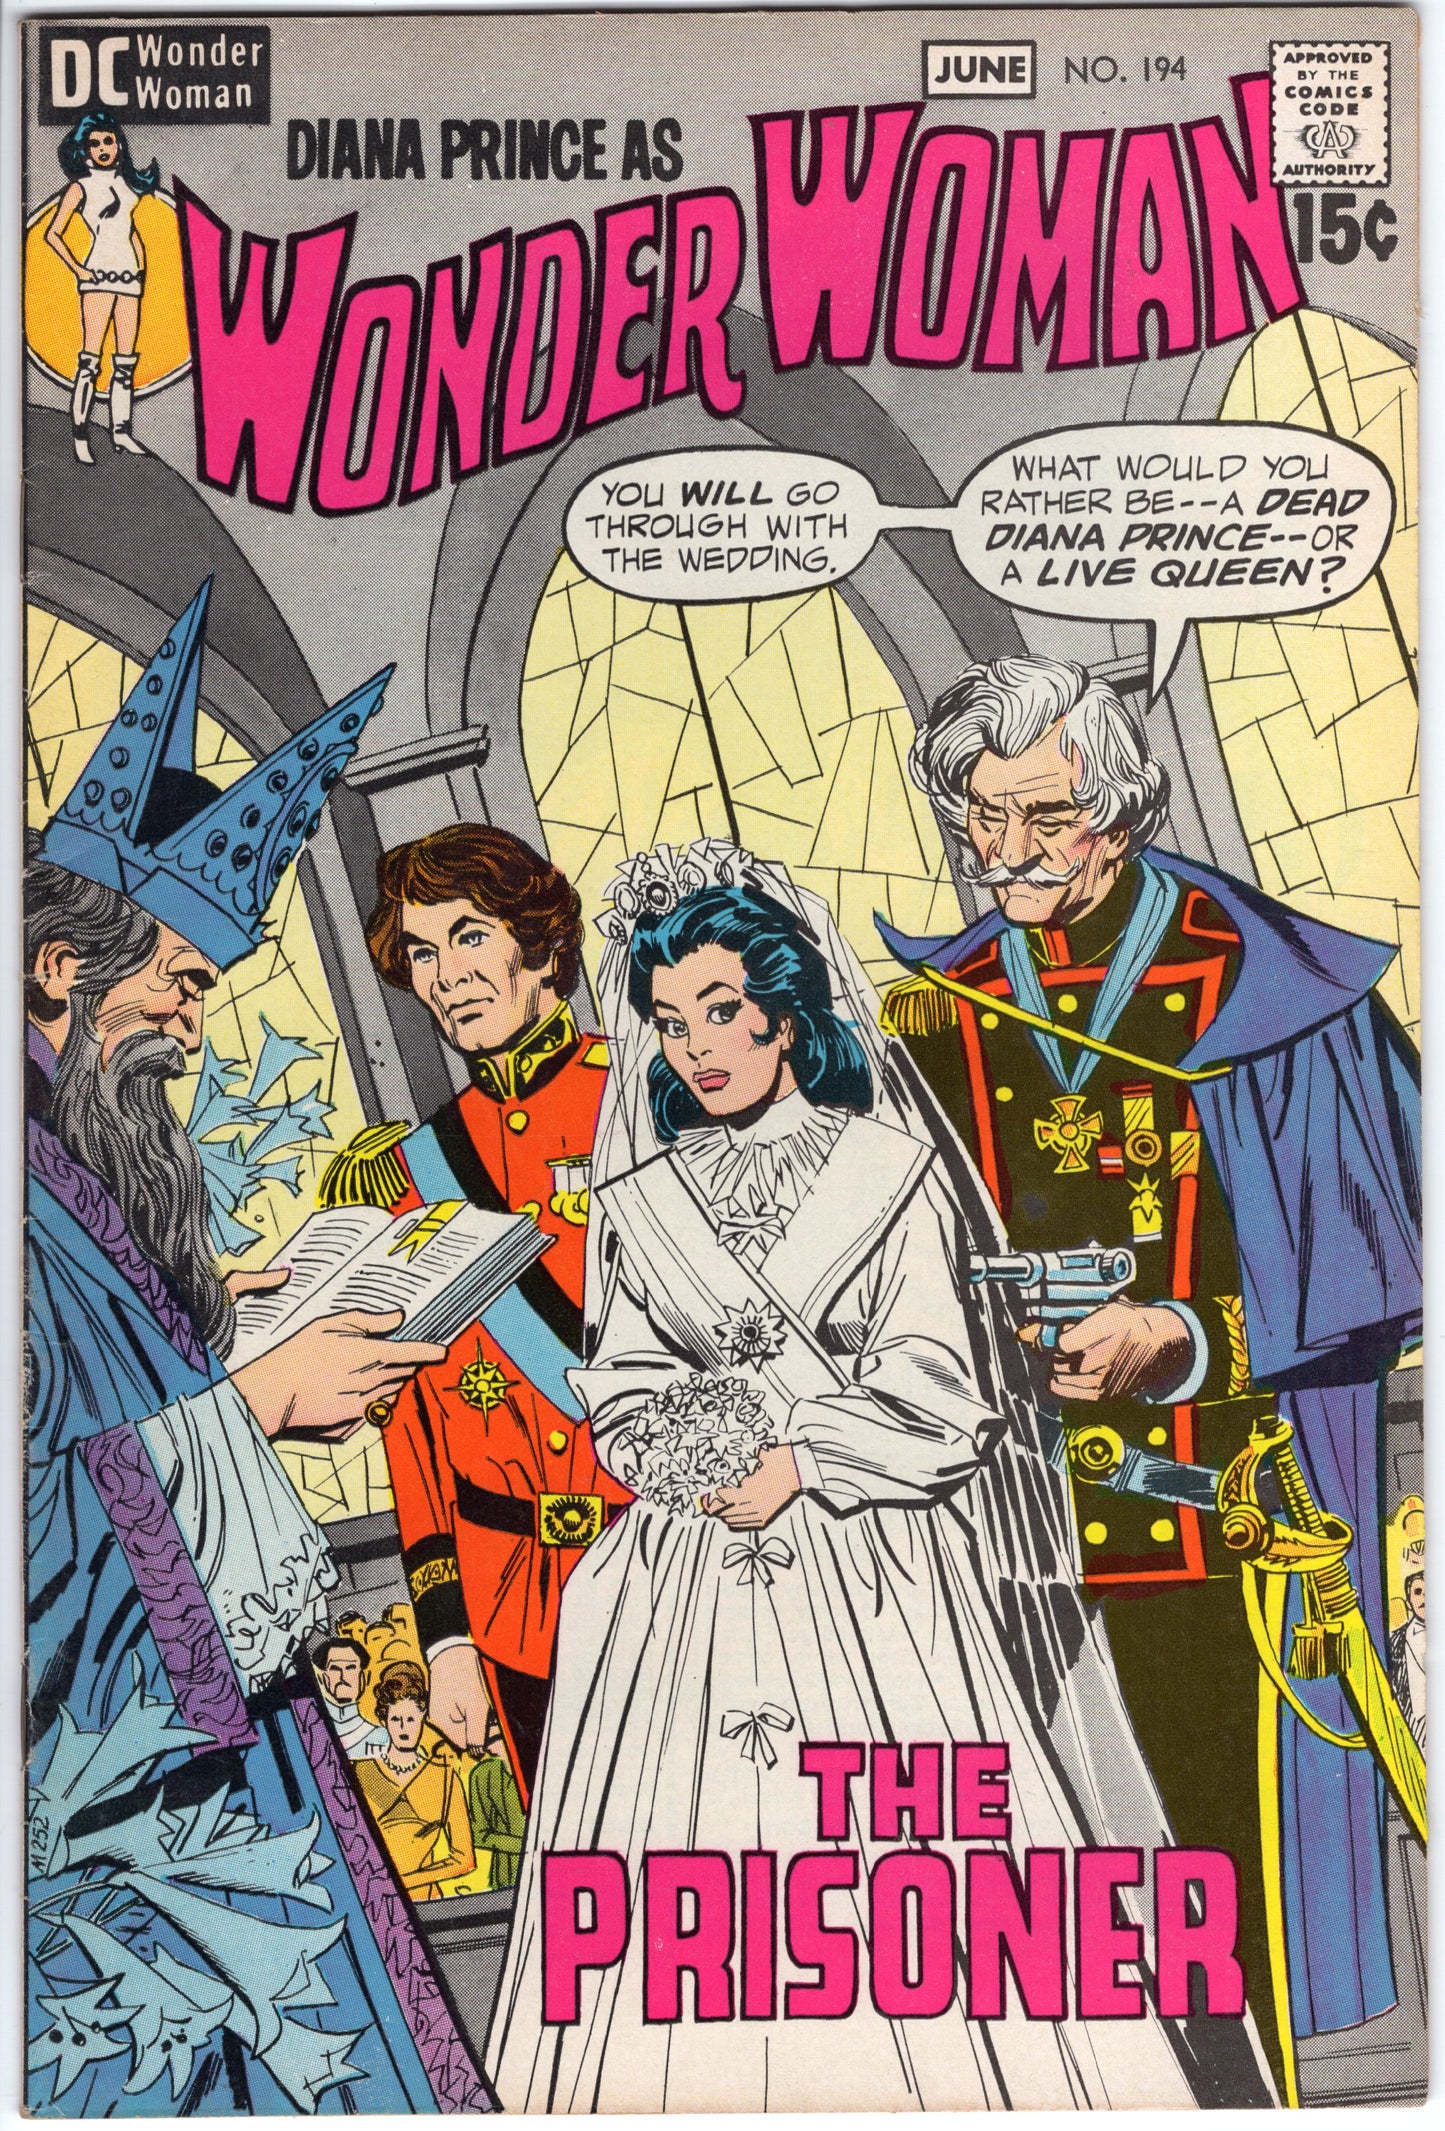 Wonder Woman - Issue #194 "The Prisoner" (June, 1971 - DC Comics) FN-